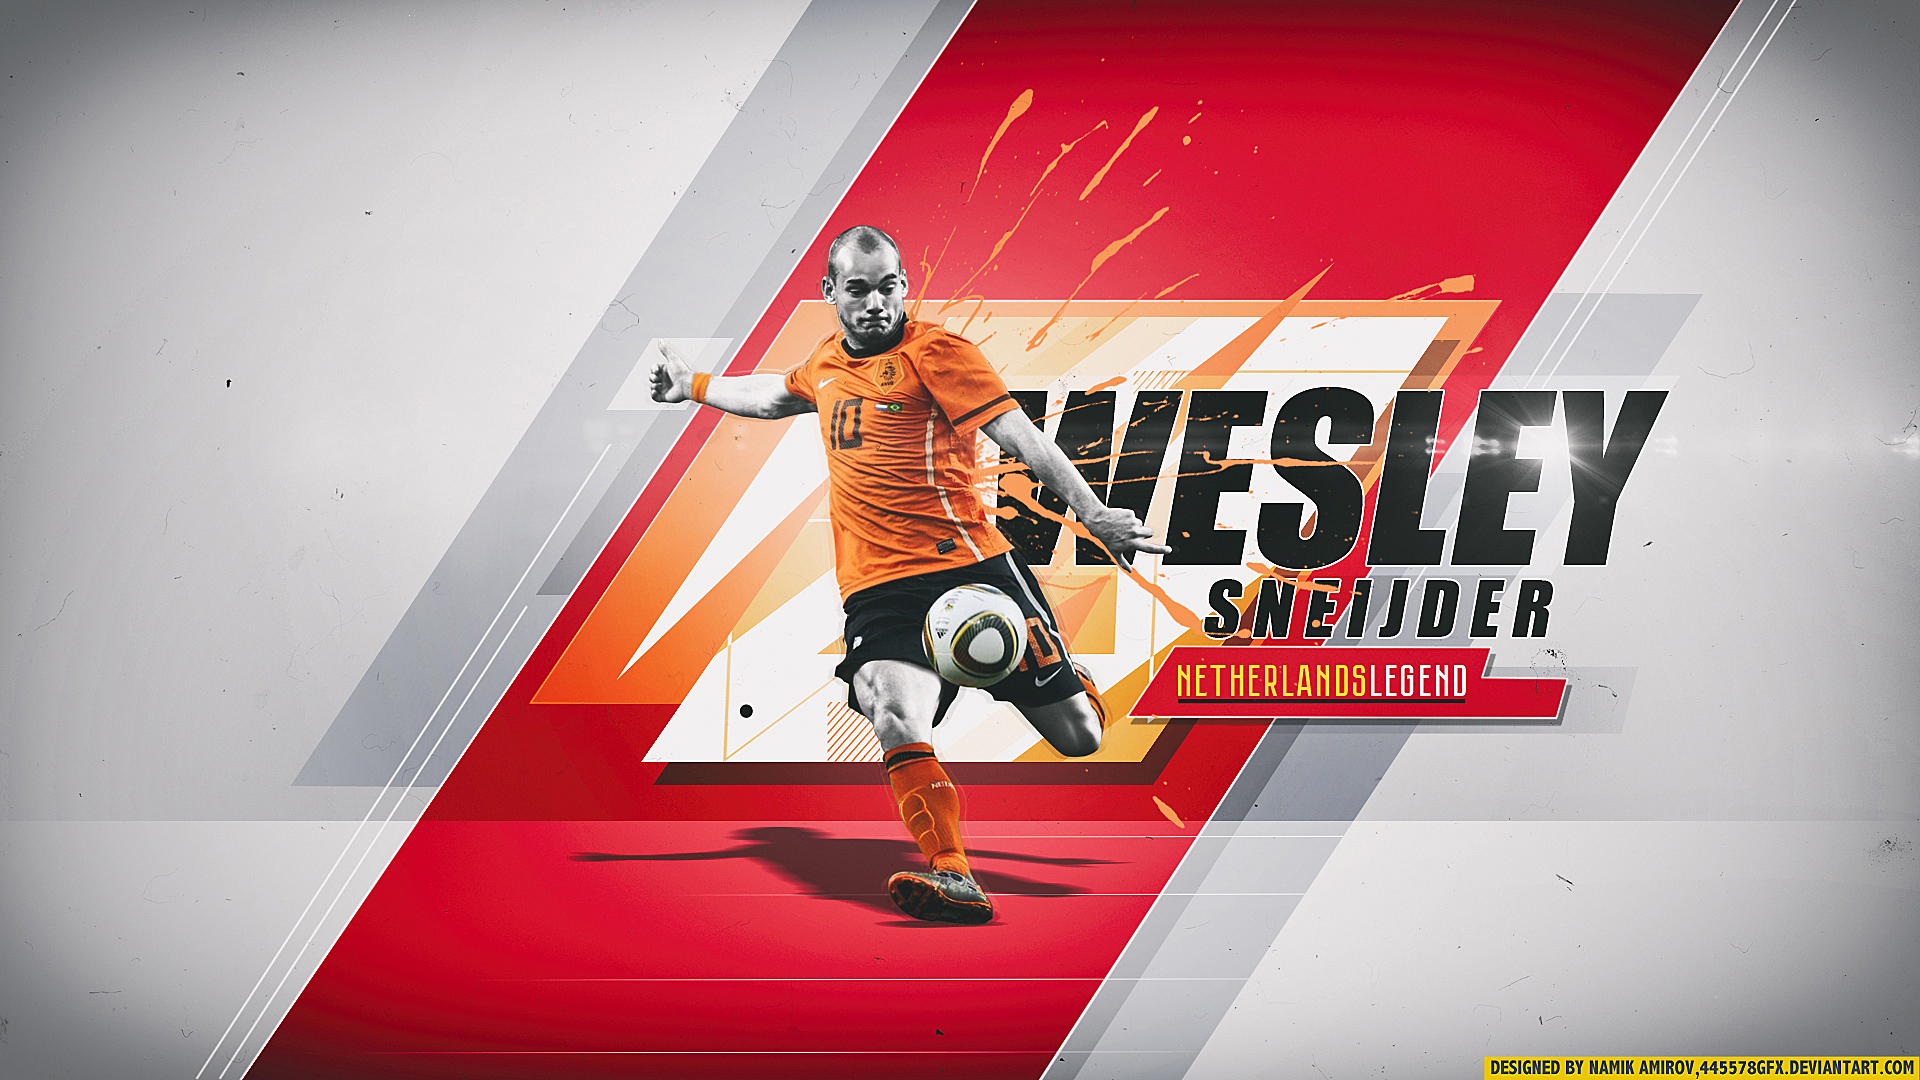 sports, wesley sneijder, netherlands national football team, soccer